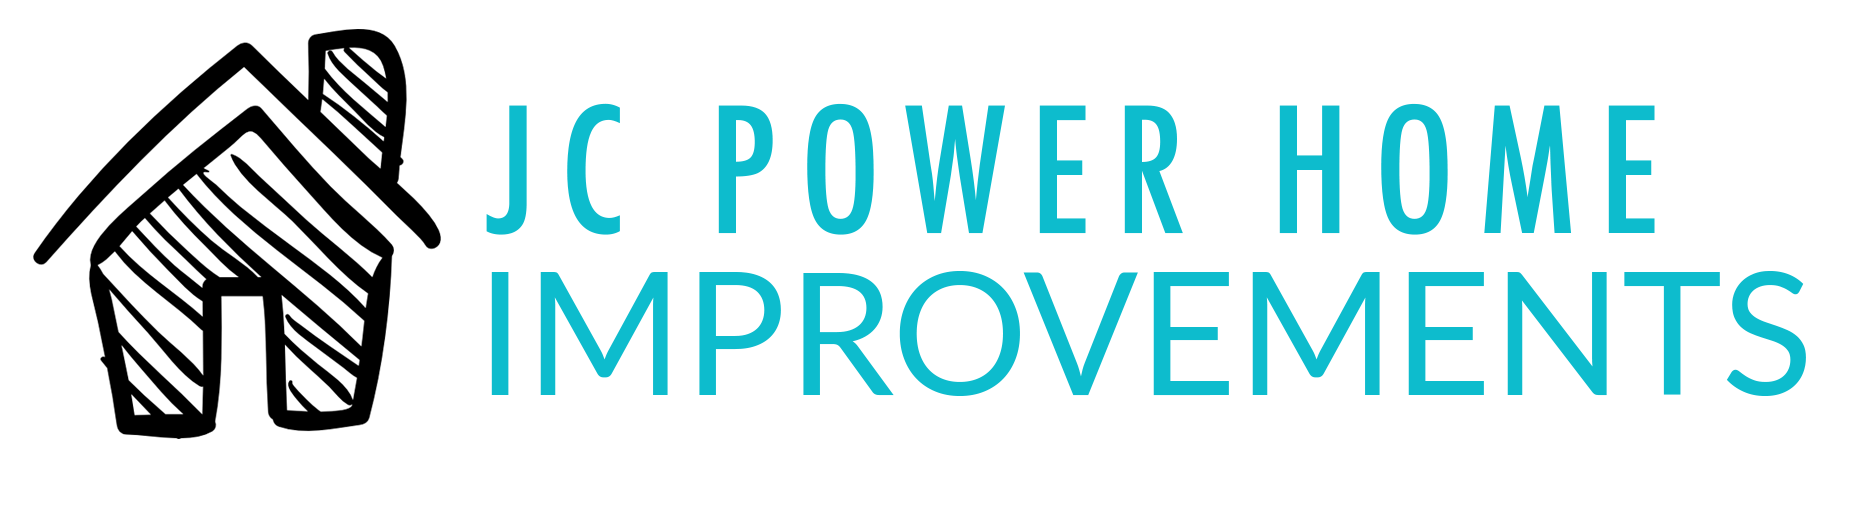 JC Power Home Improvements logo